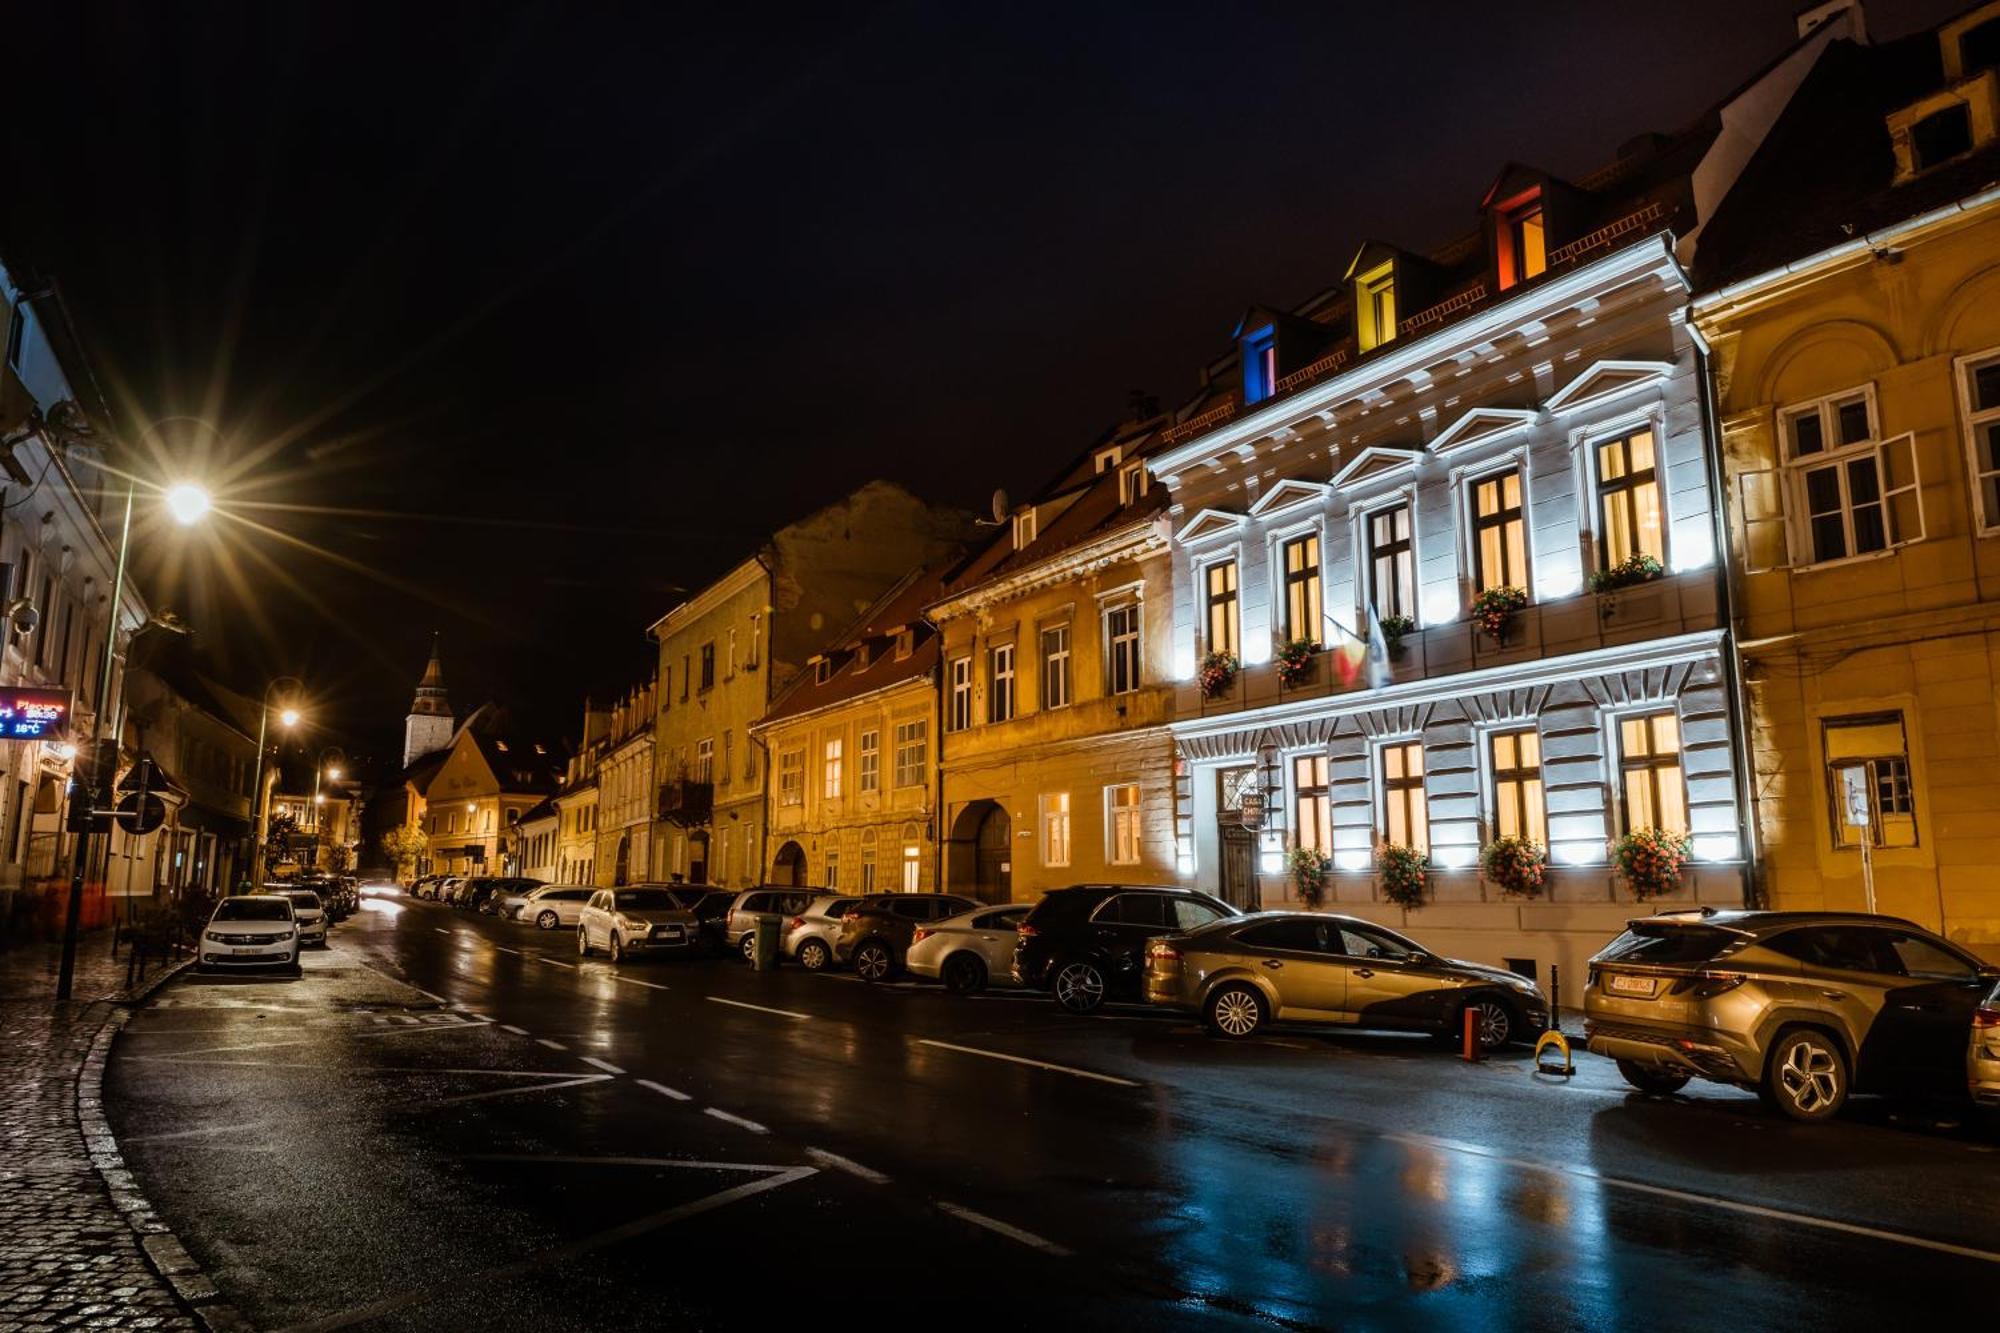 Casa Chitic - Hotel & Restaurant- Str Nicolae Balcescu 13 Braşov Eksteriør billede